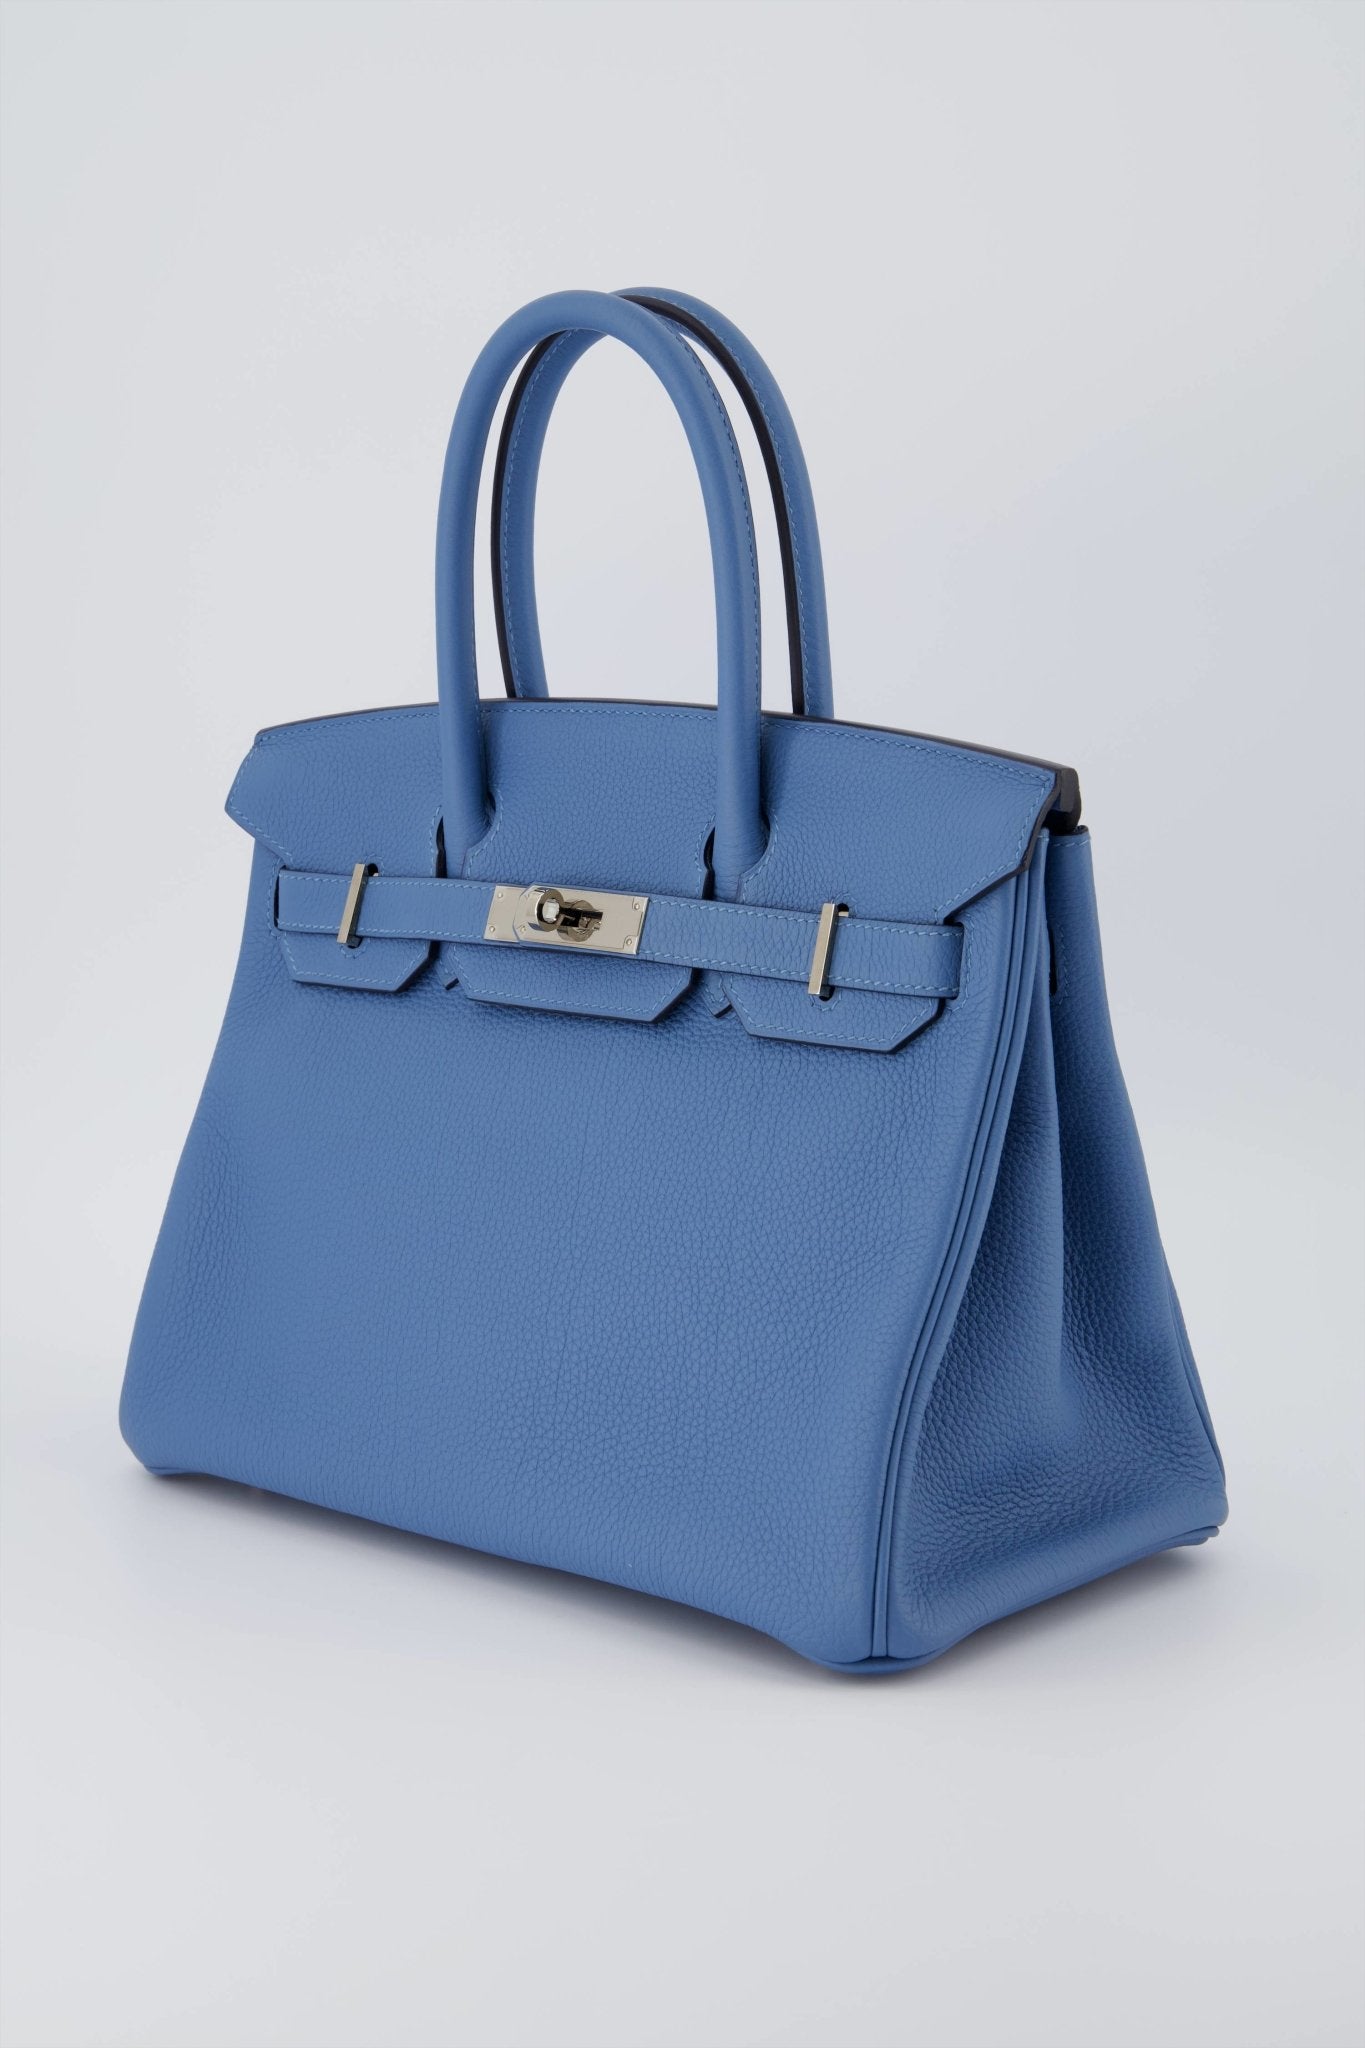 Hermes Birkin Bag light blue  Hermes bag birkin, Hermes birkin, Birkin  handbags